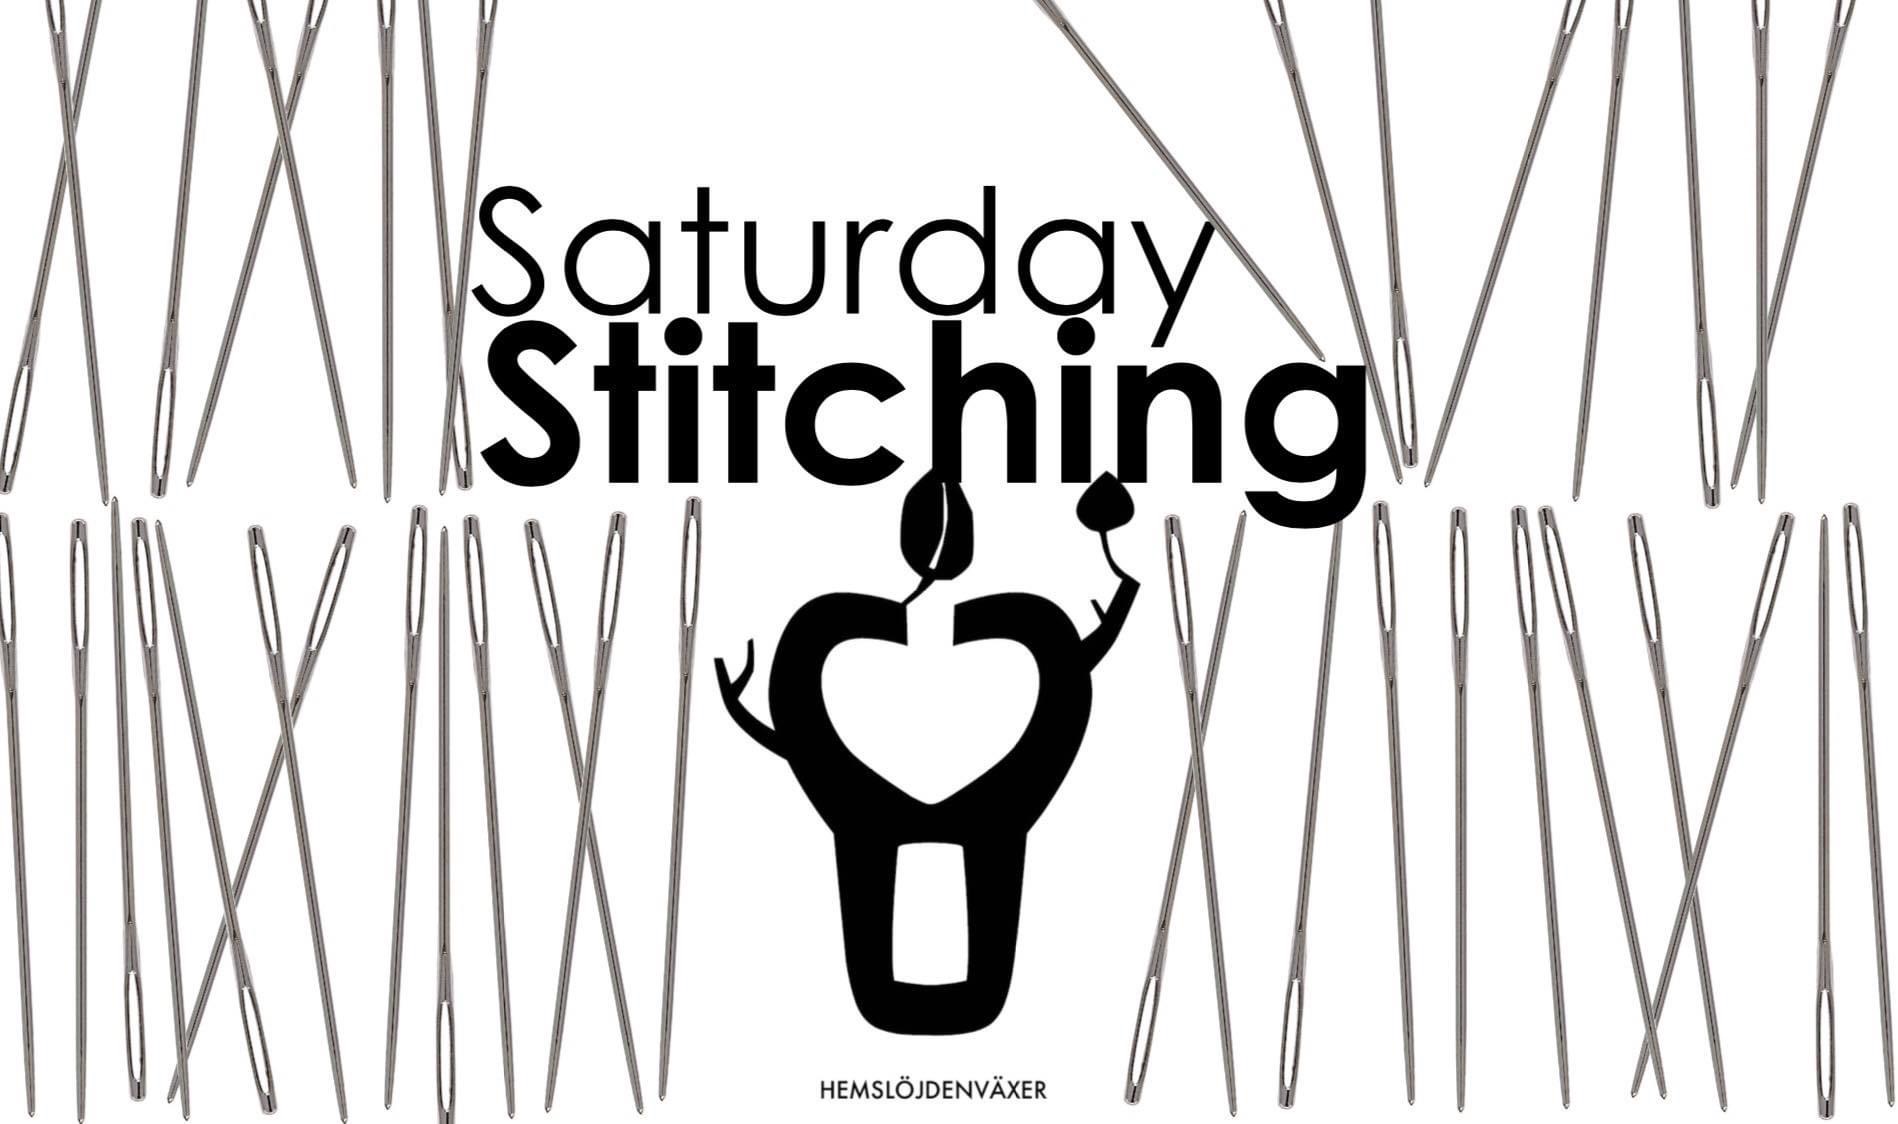 Saturday Stitching